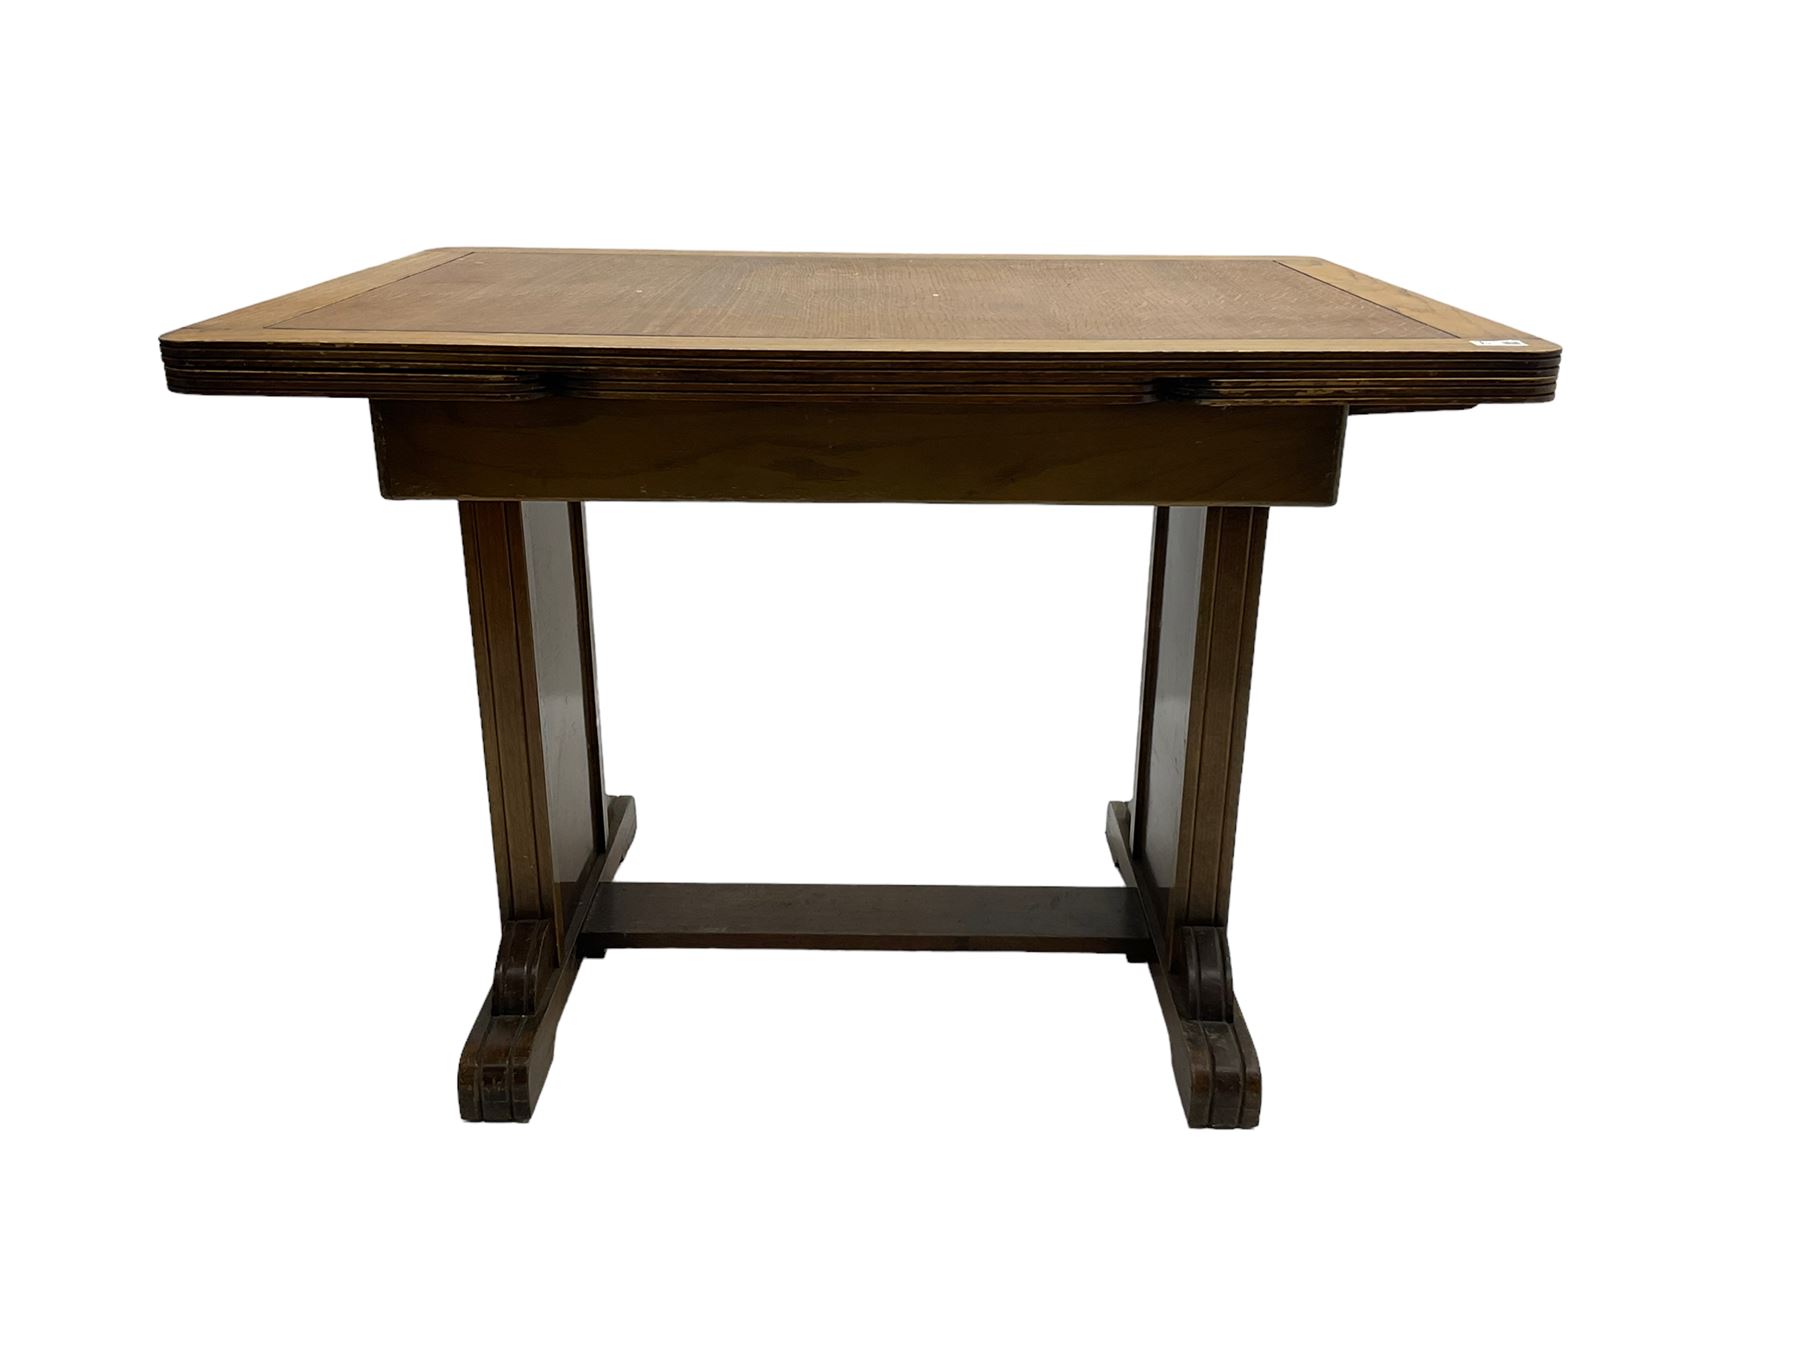 Oak rectangular extending dining table - Image 3 of 3